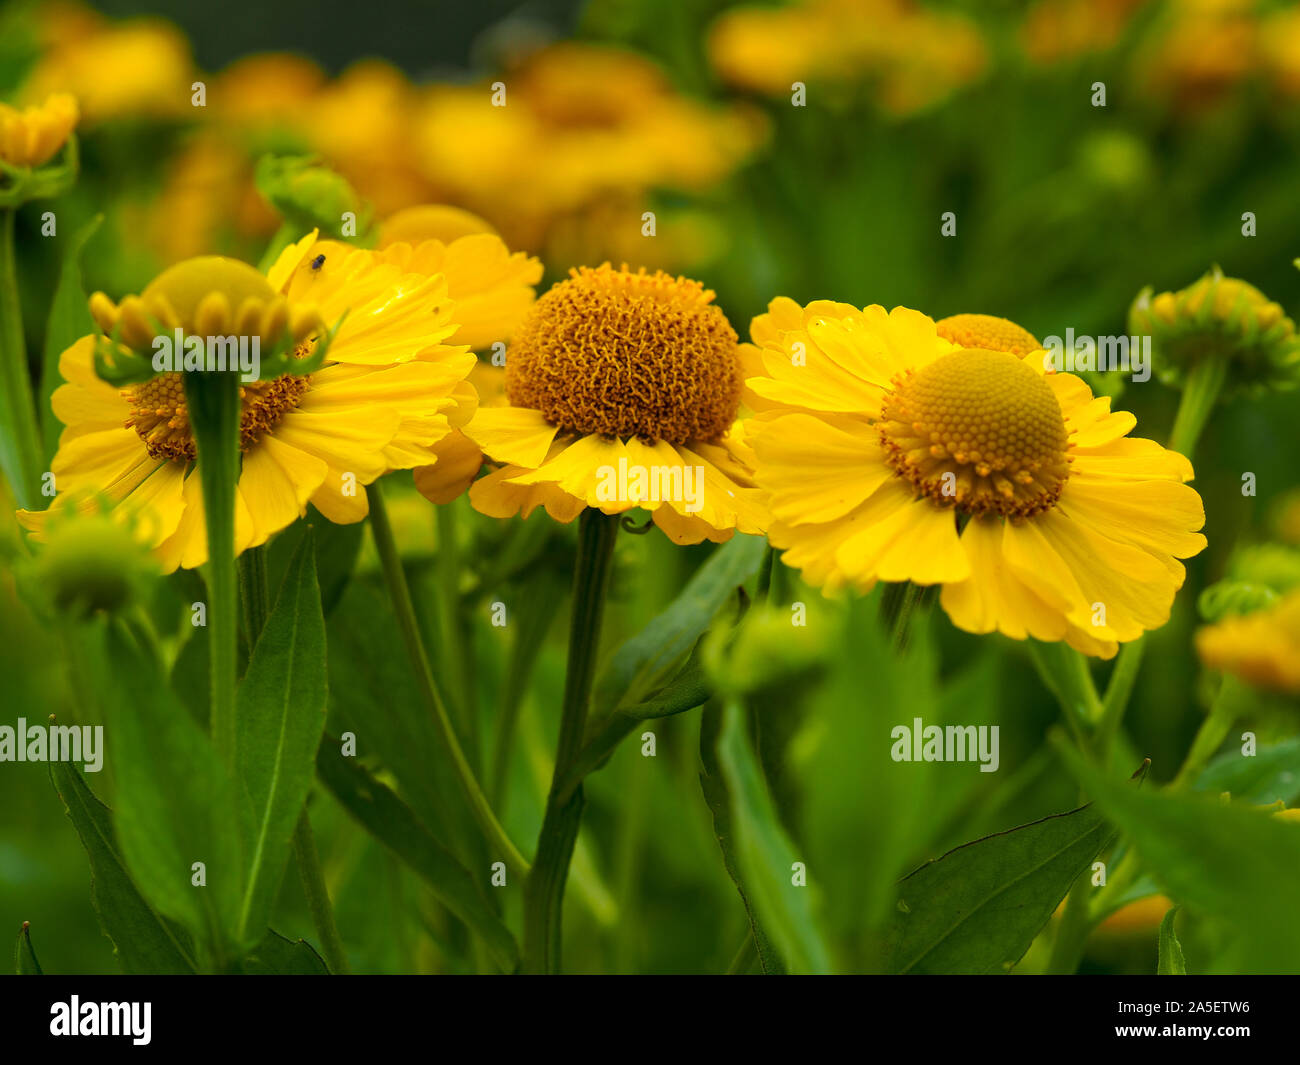 Bright yellow Helenium flowers (sneezeweed) in a garden Stock Photo